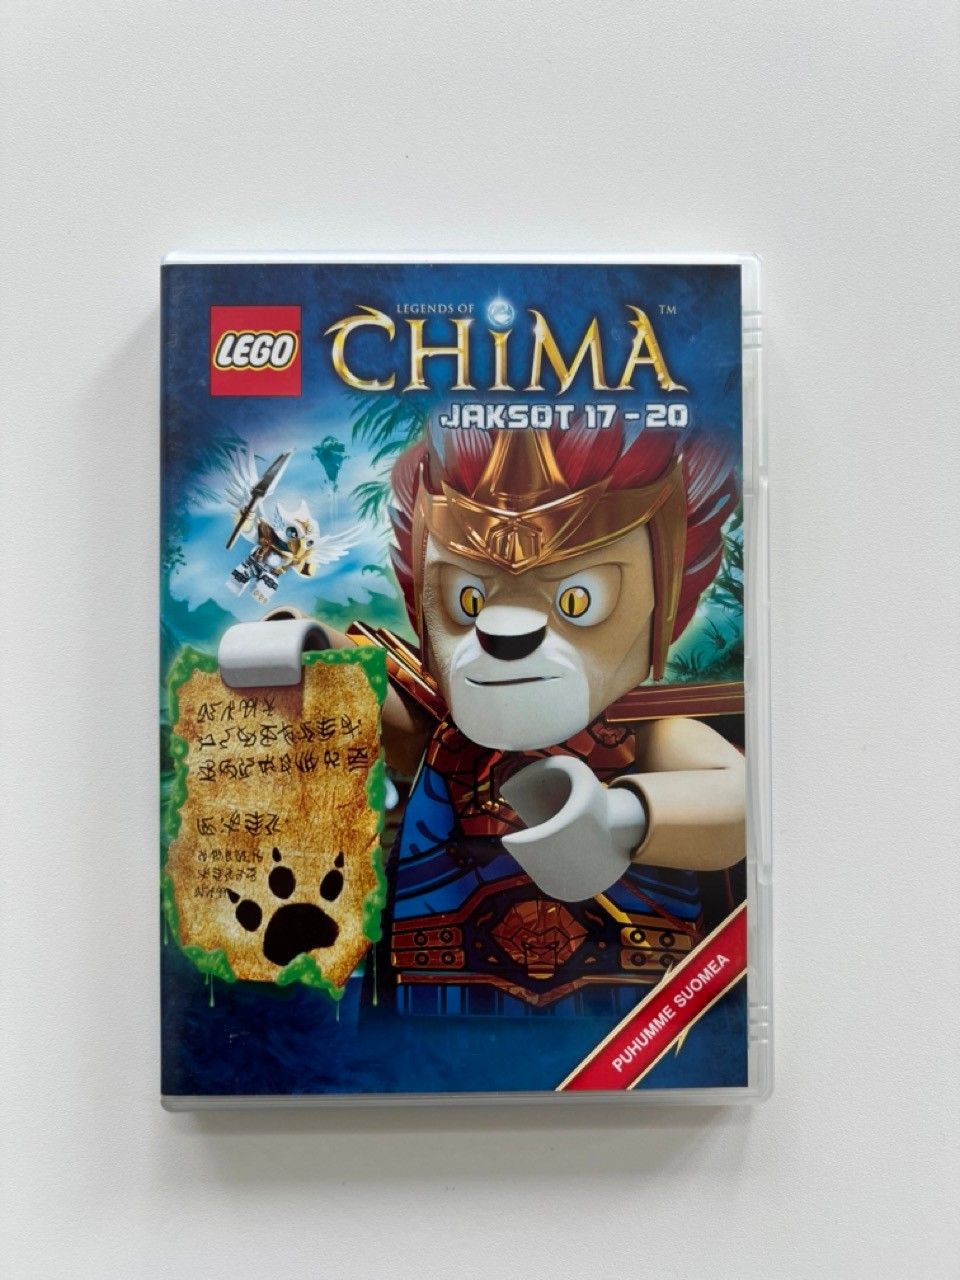 DVD lapset: Lego Chima, jaksot 17-20